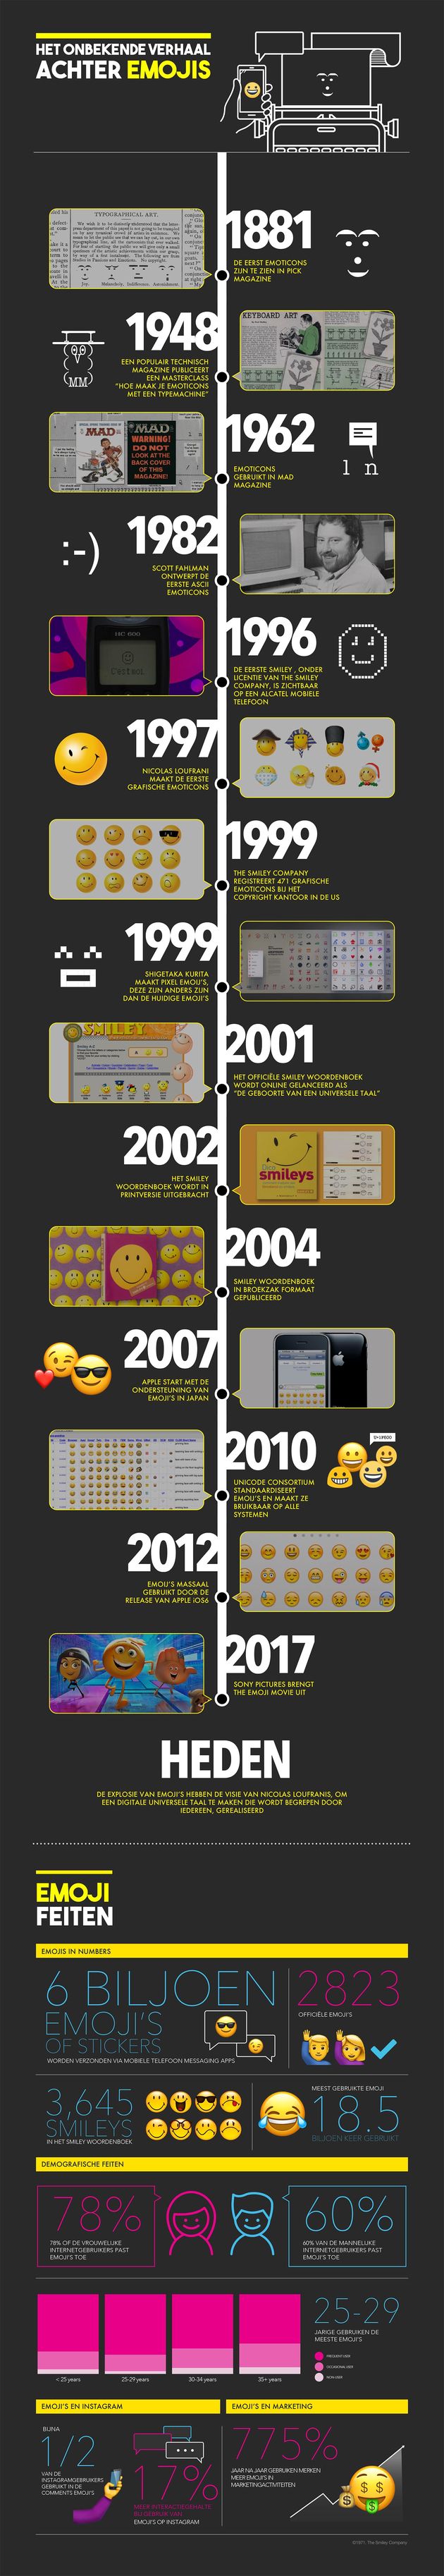 NL infographic_World-Emoji-Day-Dutch (1)